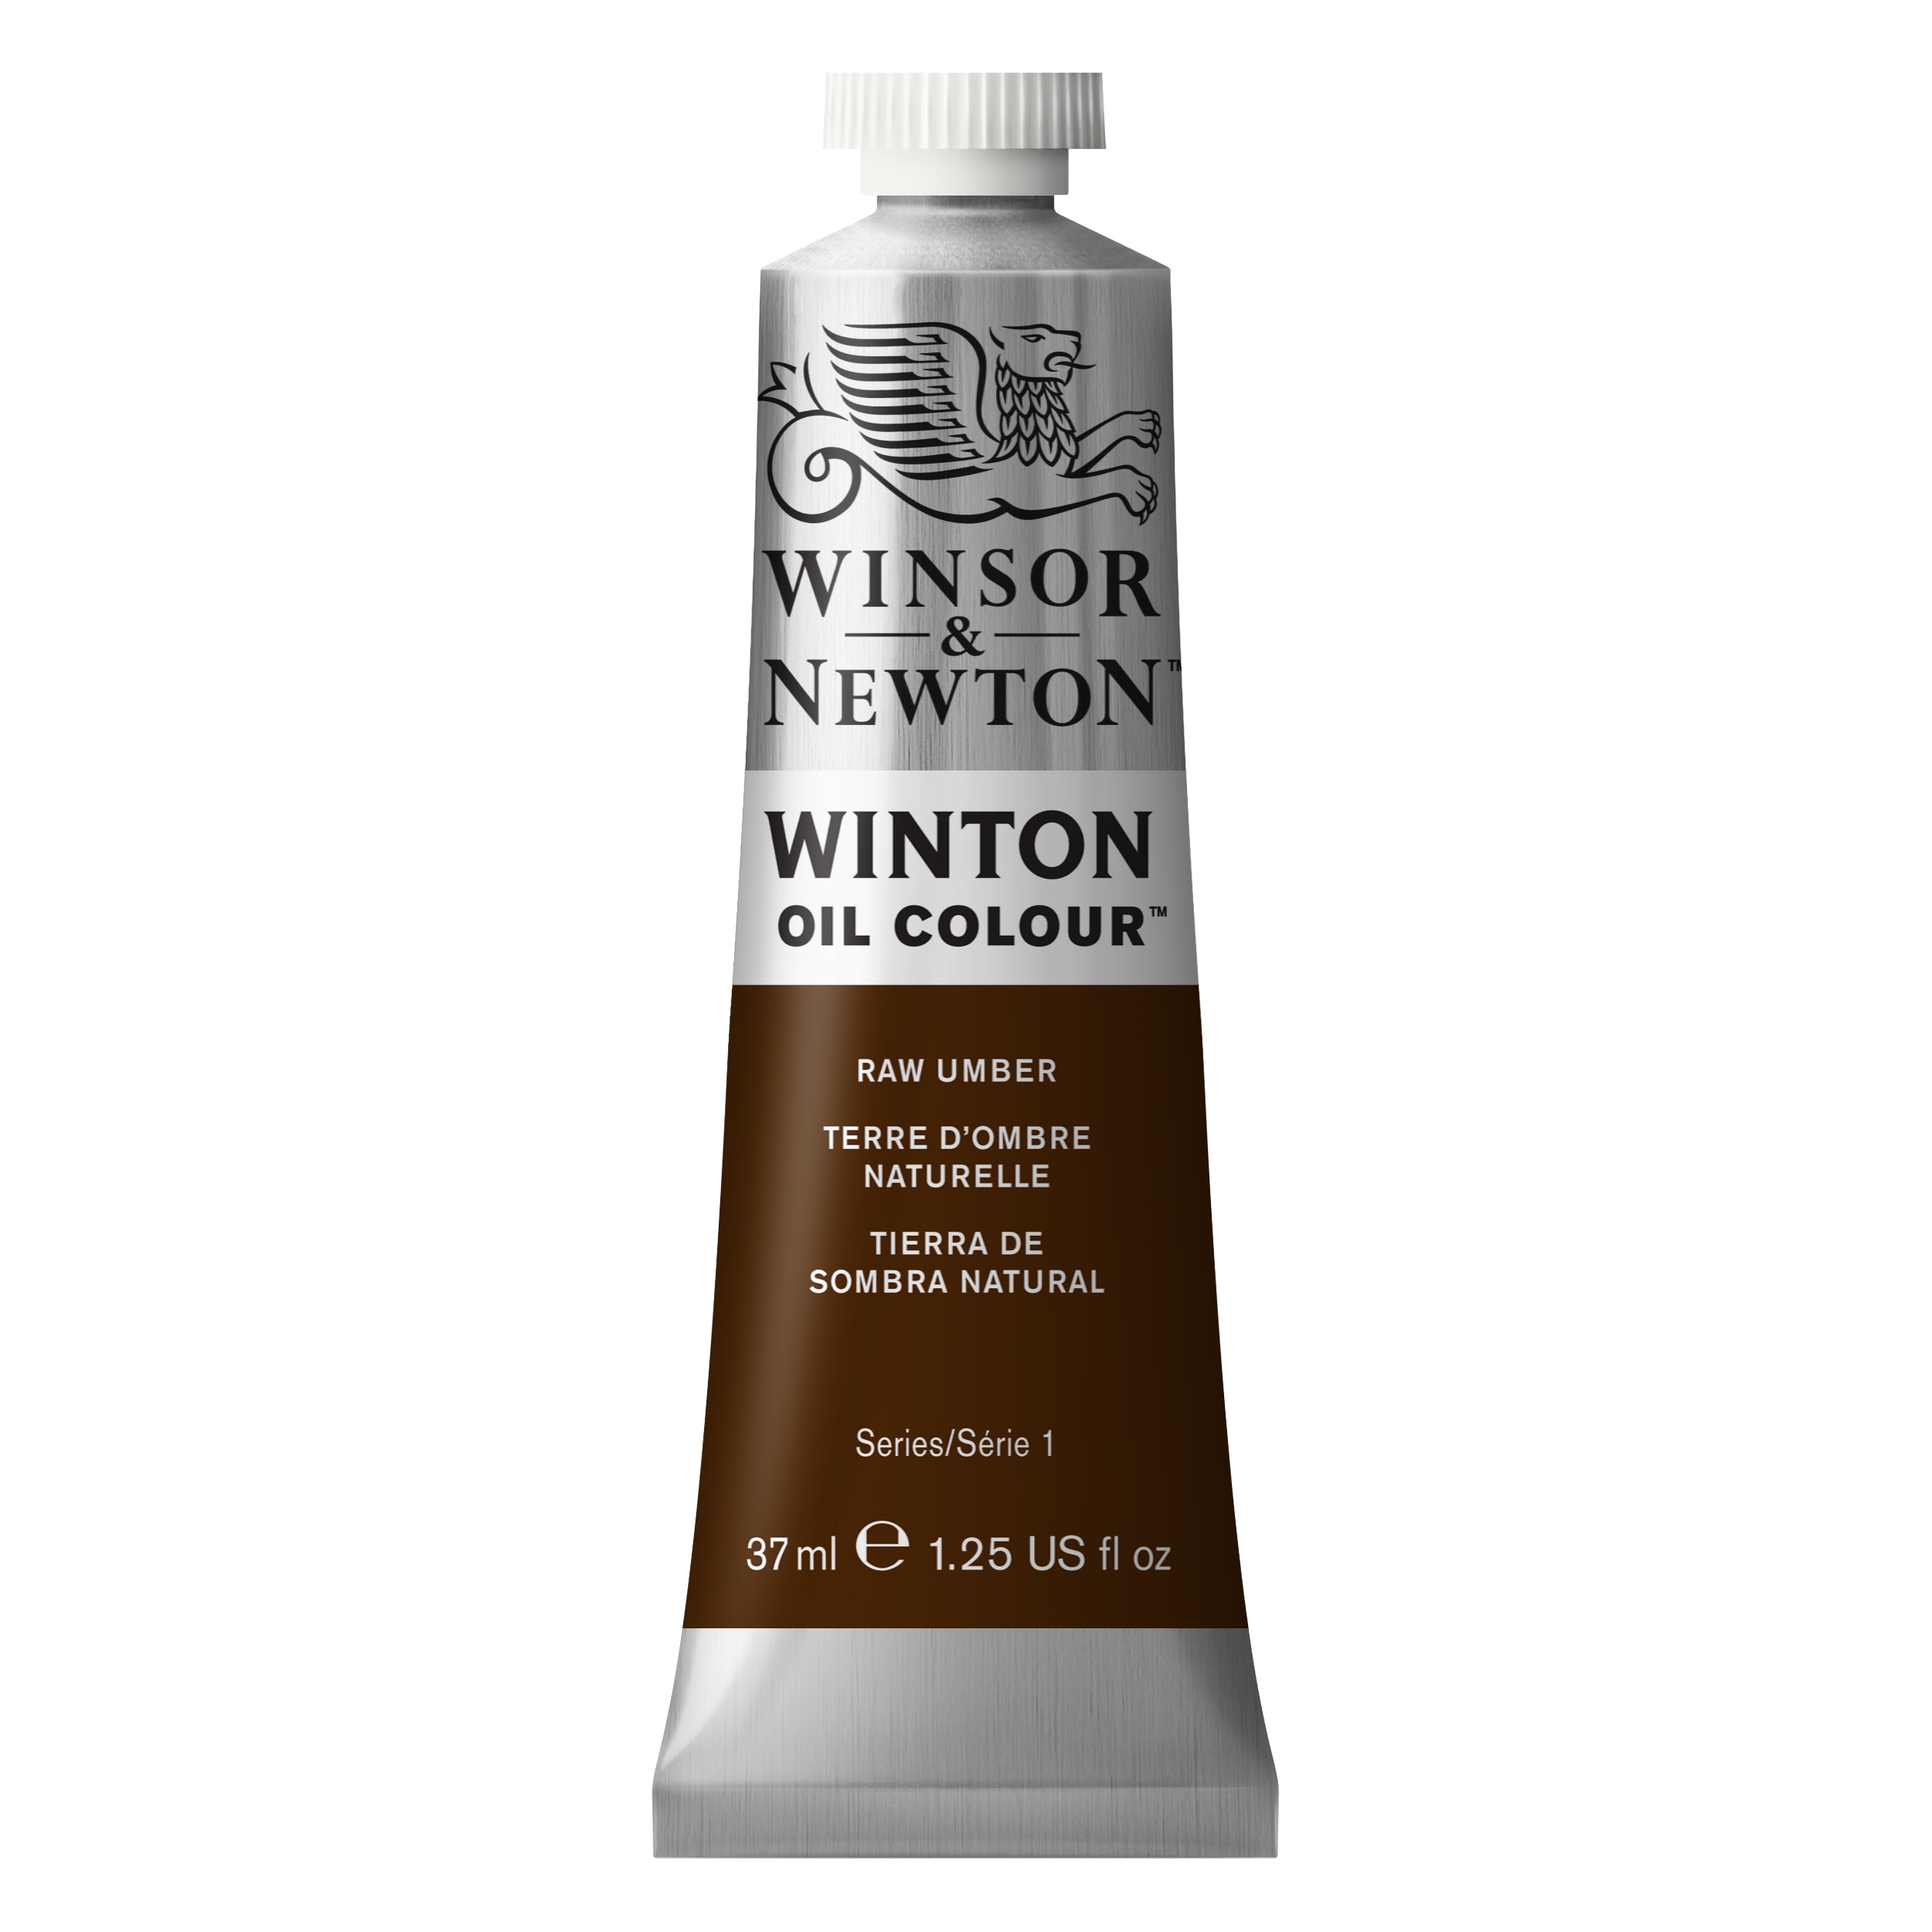 Winsor & Newton Winton Oil Color, 37ml, Raw Umber